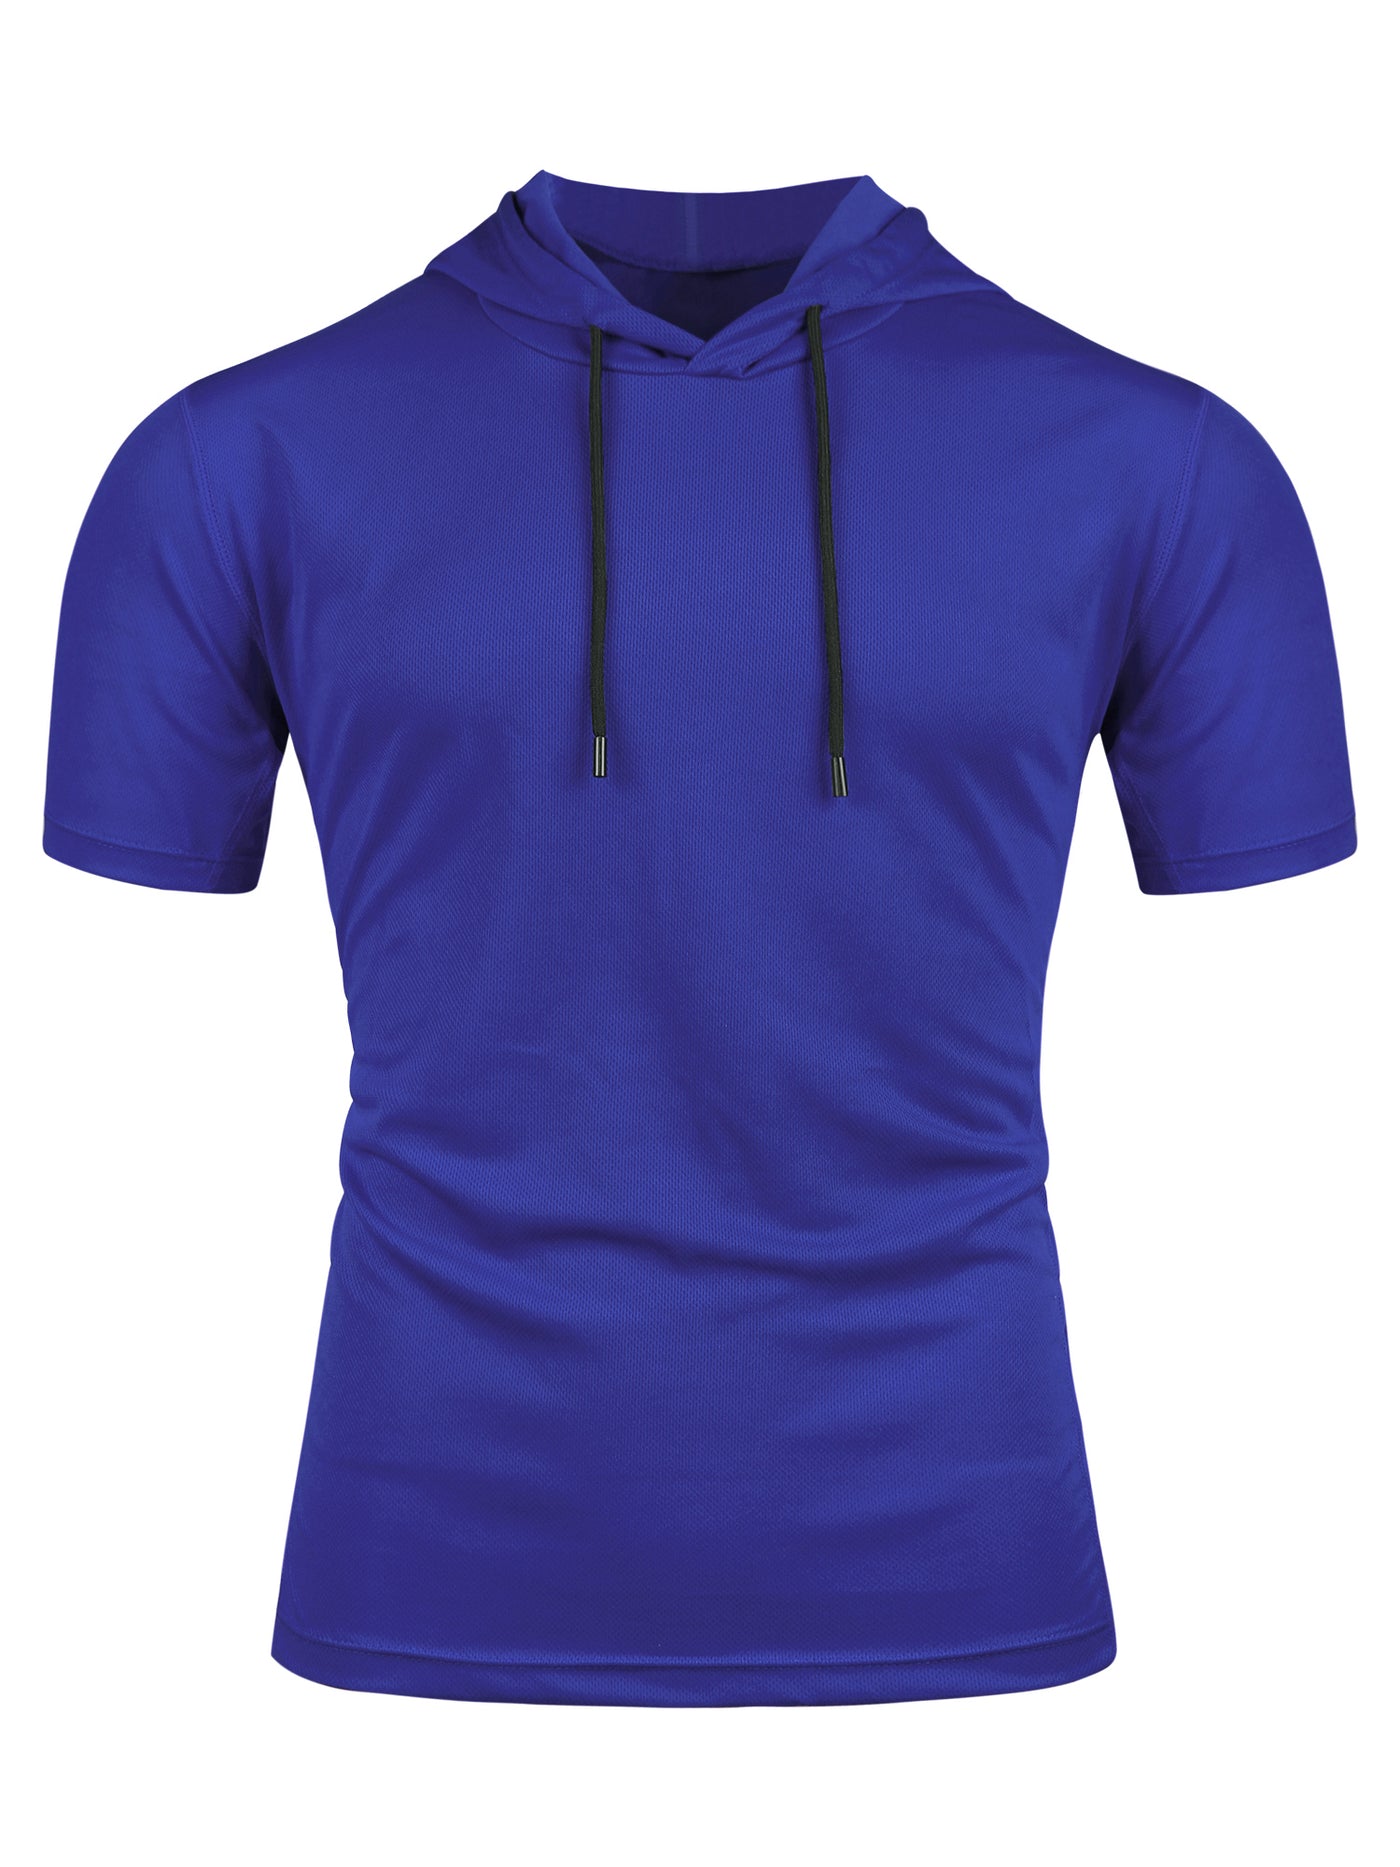 Bublédon Short Sleeve Solid Color Lightweight Workout Hoodies